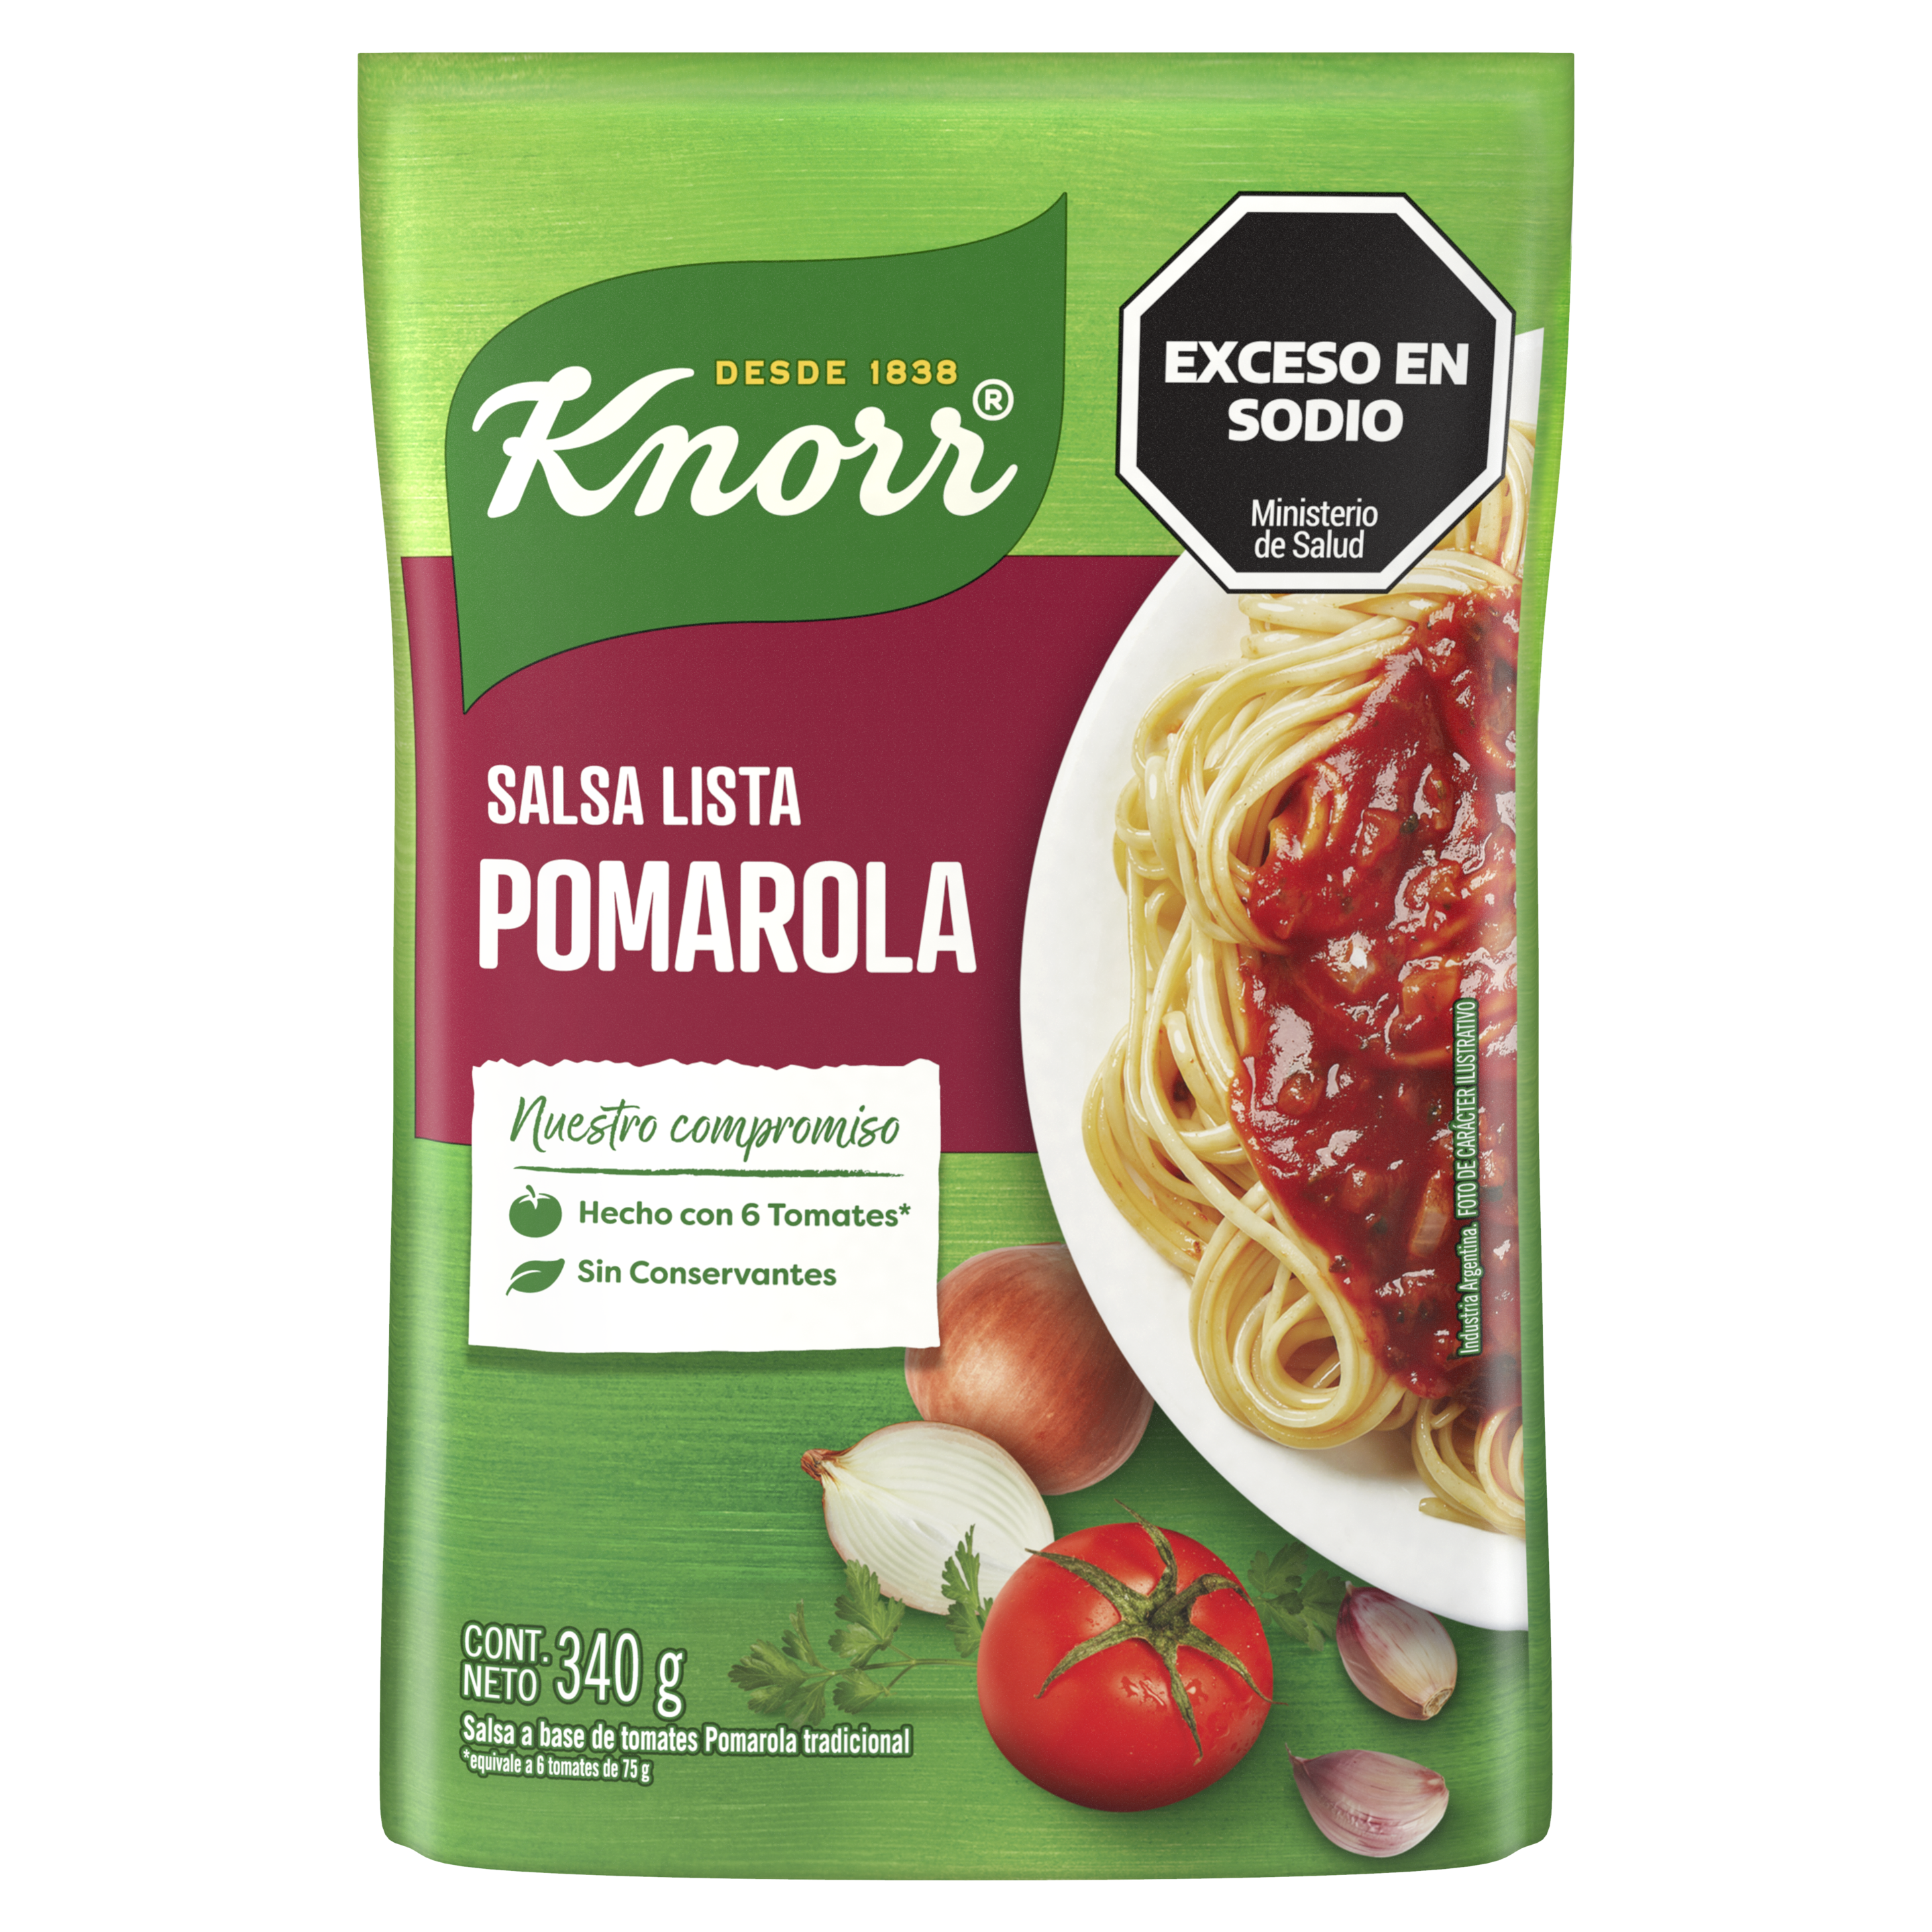 Imagen de envase Salsa Lista Pomarola Knorr